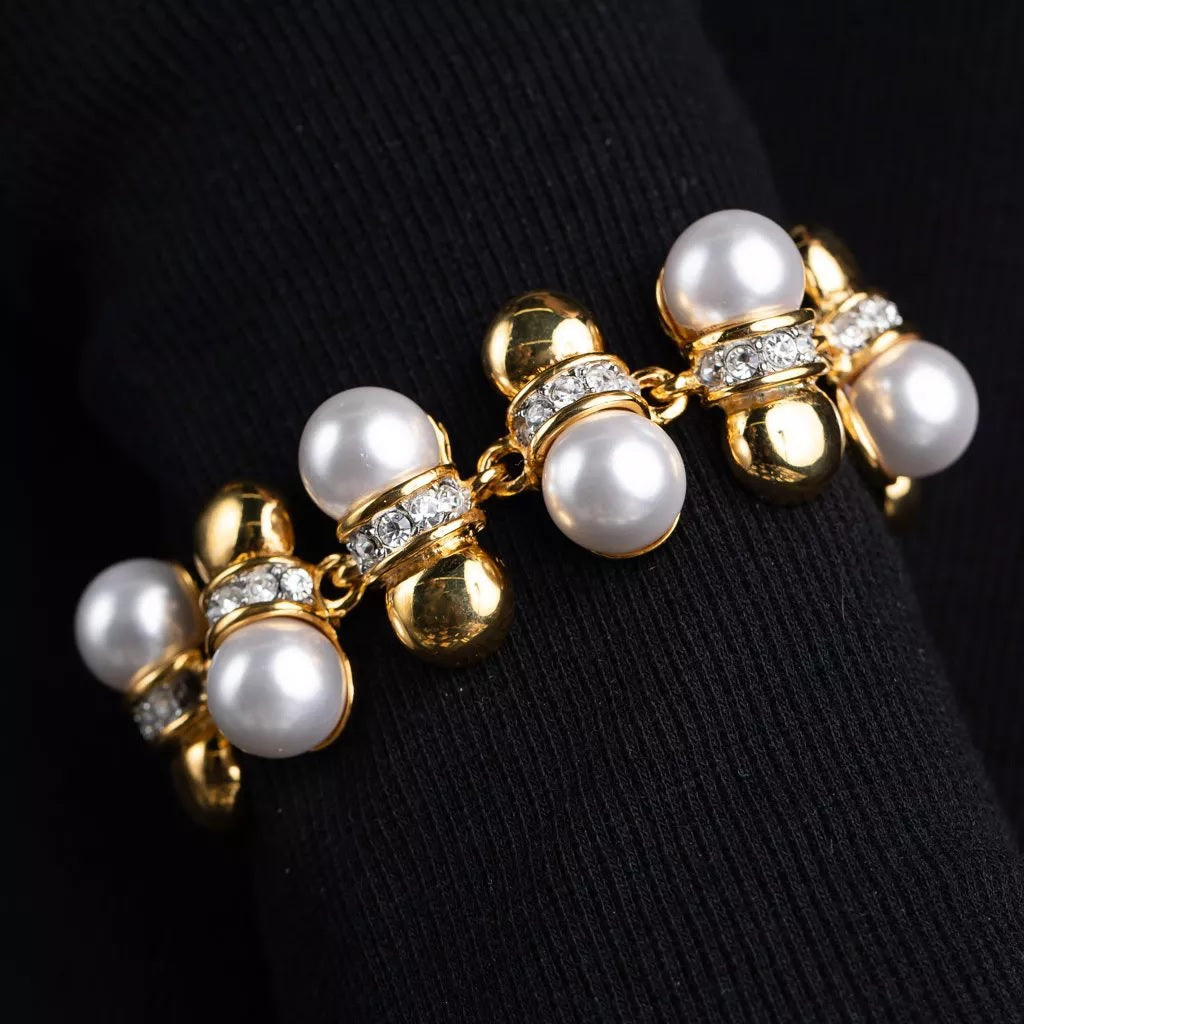 Polished Gold Rhinestone White Pearl Bracelet